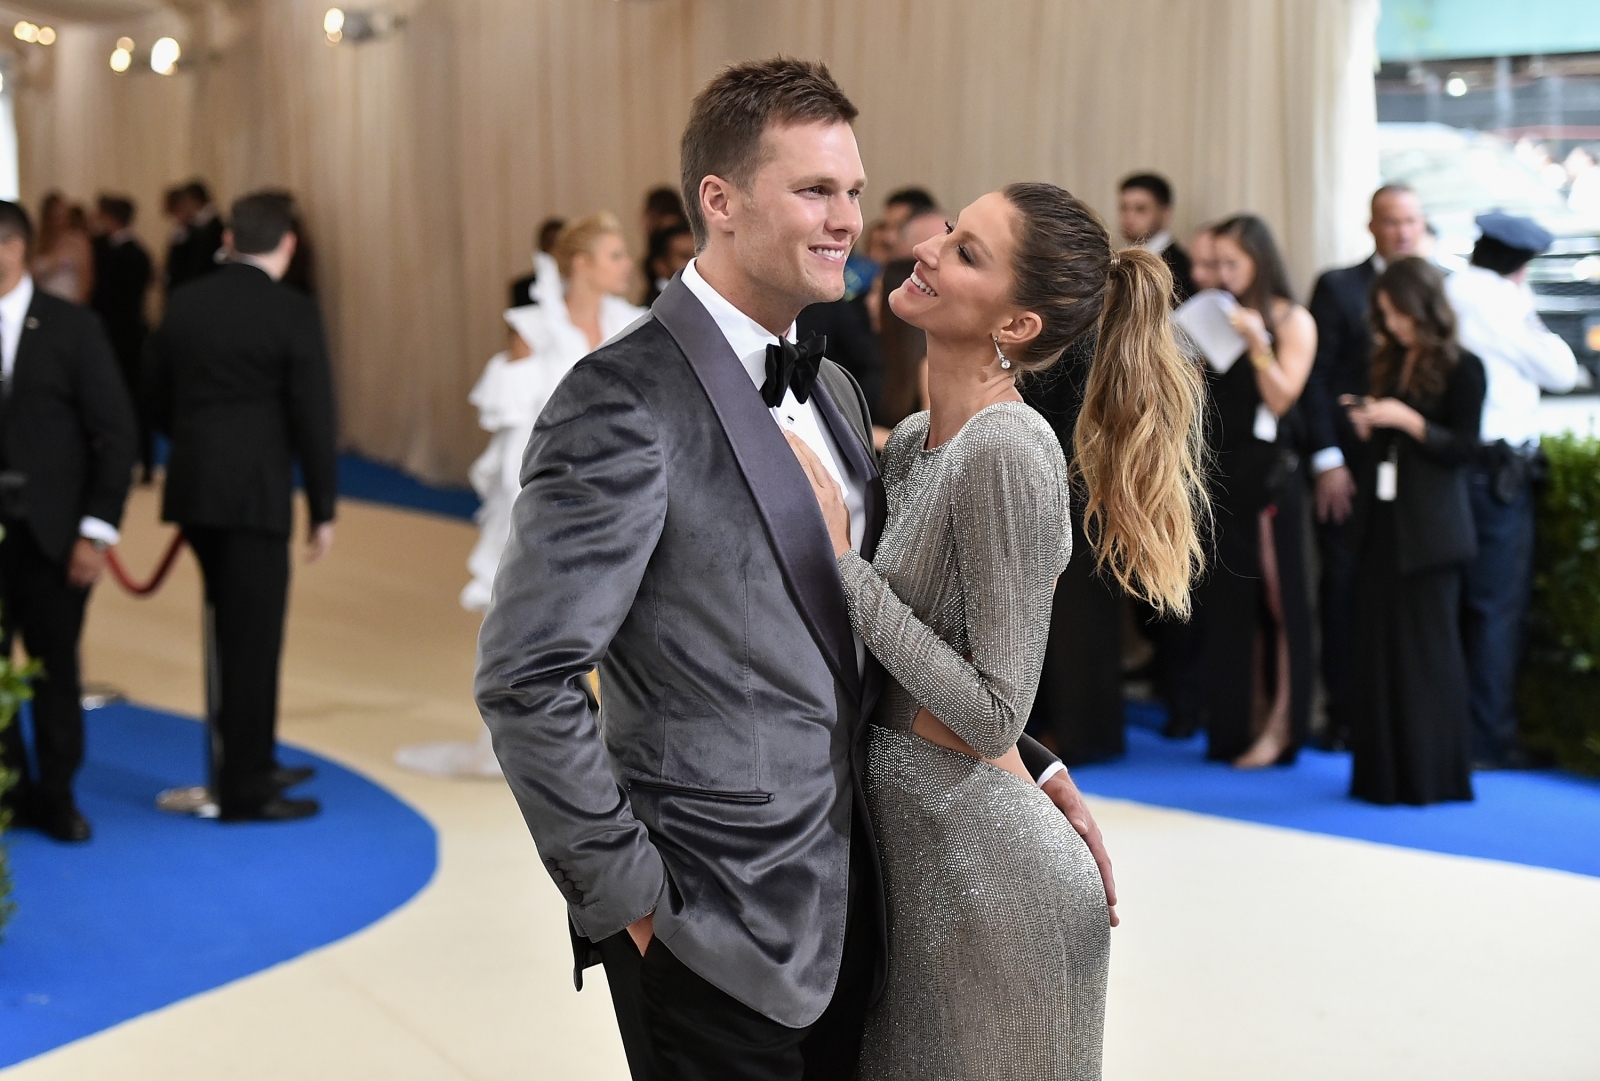 Why Nfl Star Tom Brady Is Avoiding Sex With Supermodel Wife Gisele Bündchen